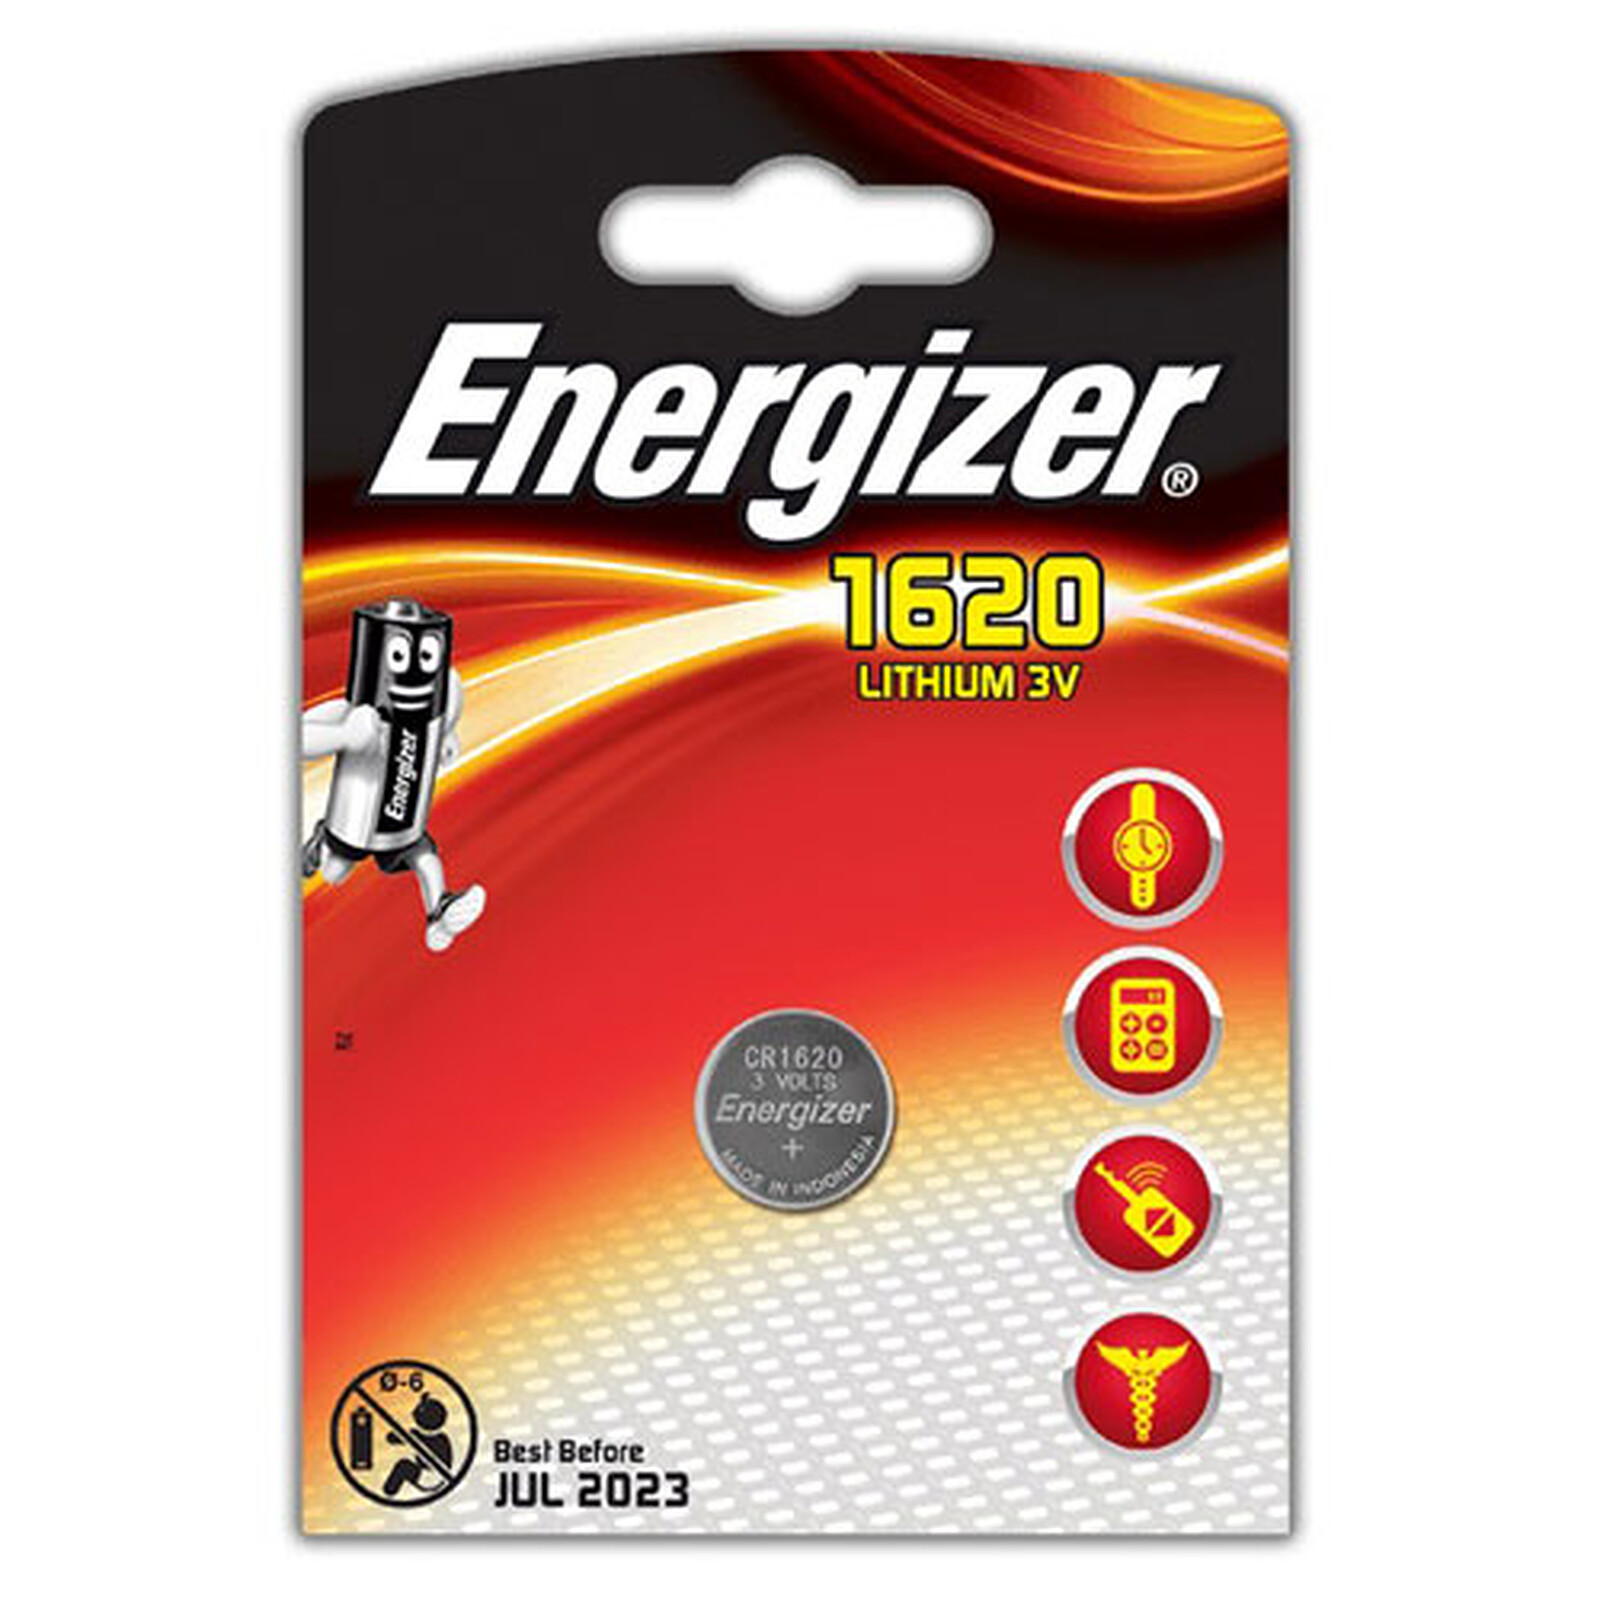 Energizer CR1620 Lithium 3V - Battery & charger - LDLC